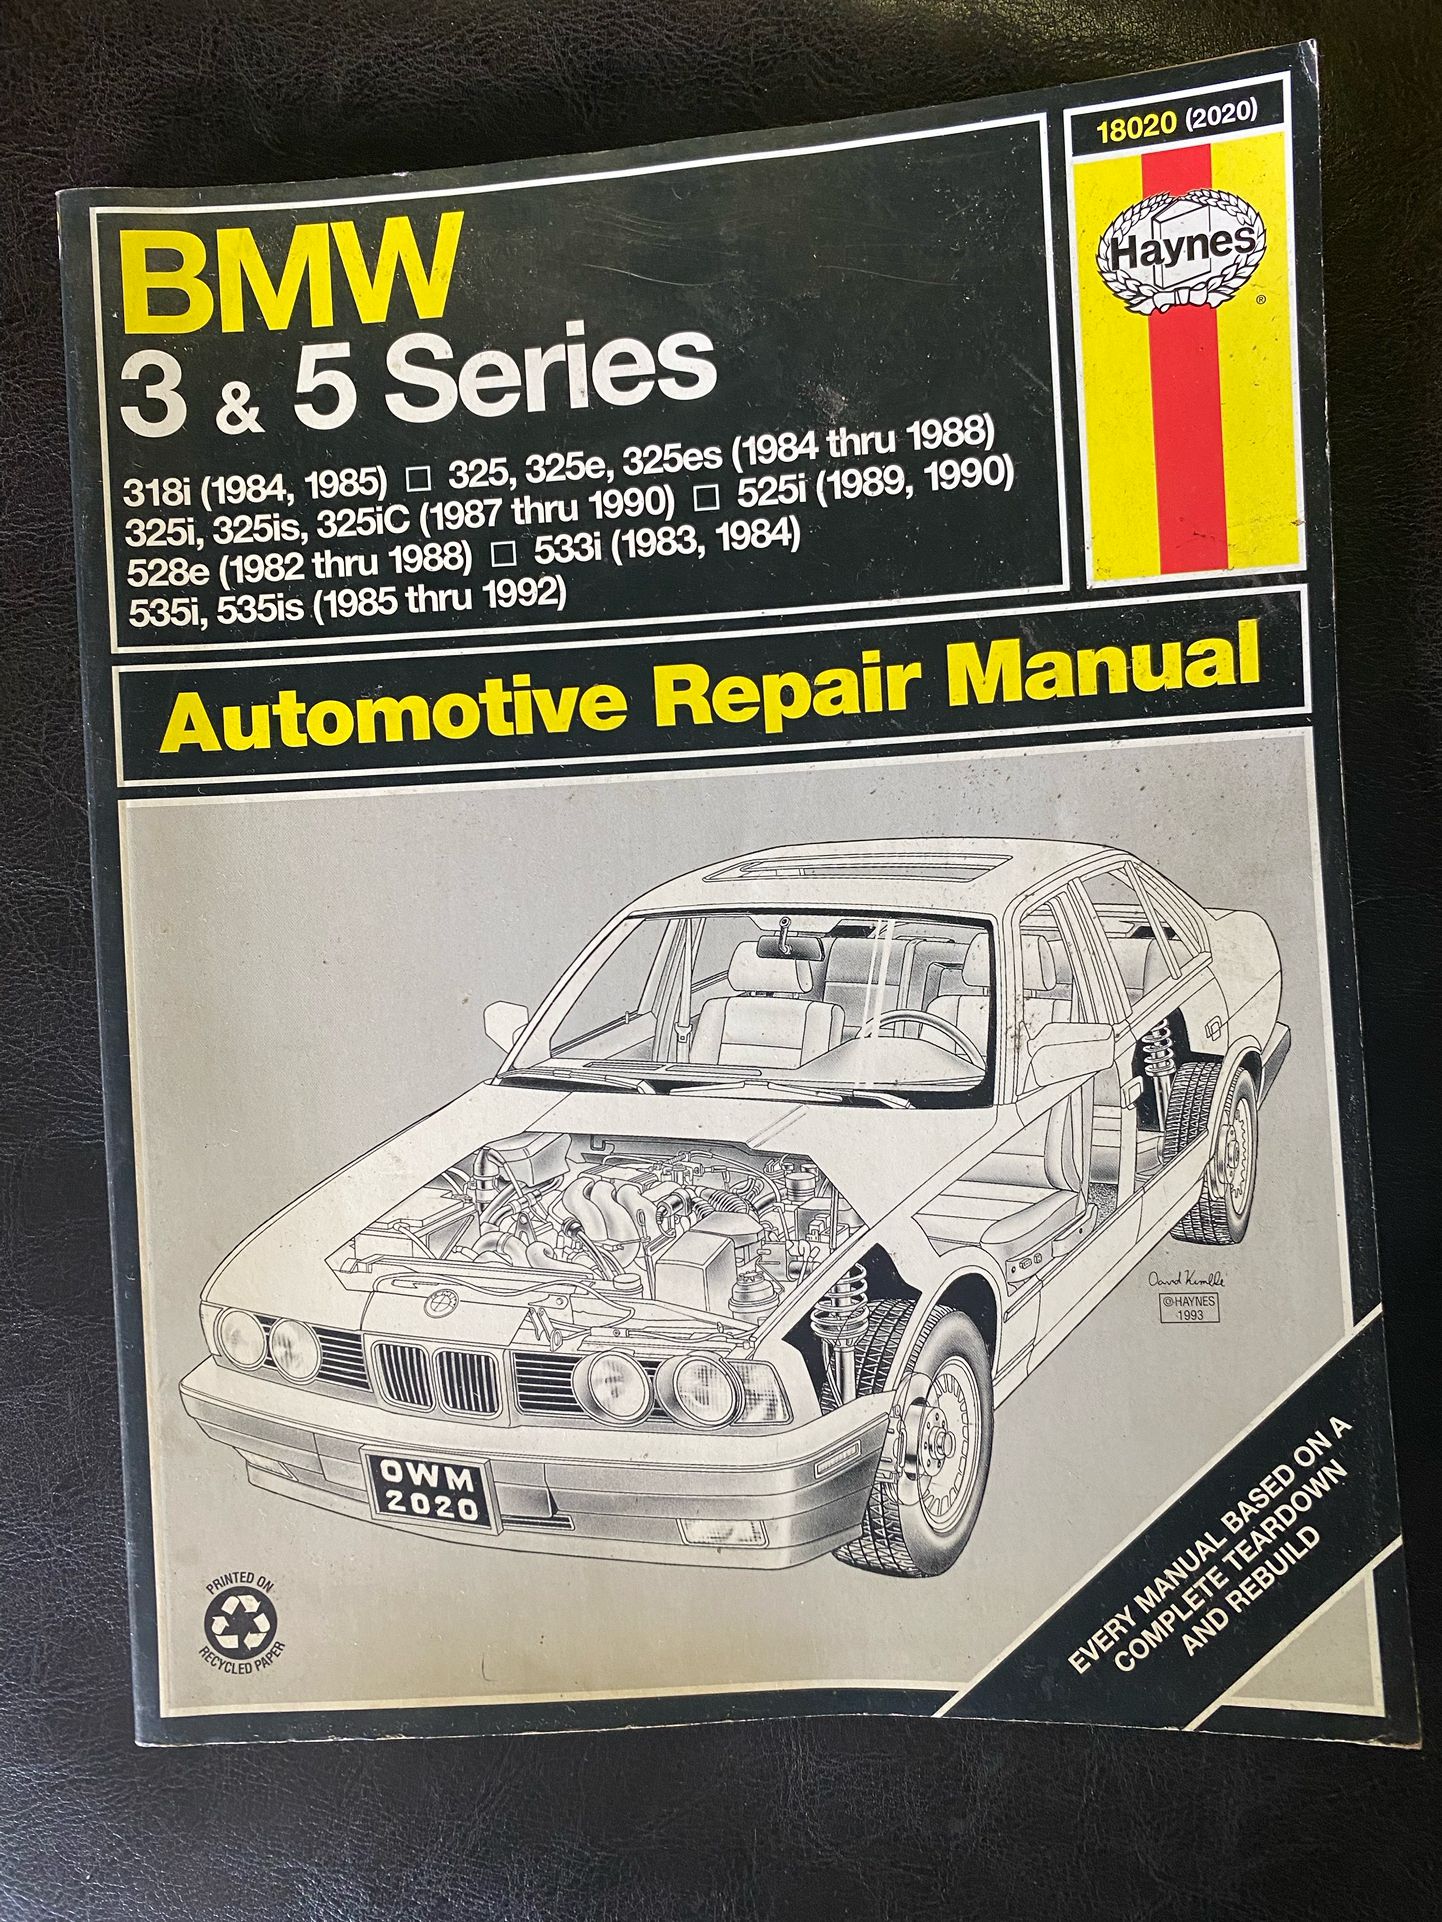 Haynes 18020 BMW 3 And 5 series Automotive Repair Manual